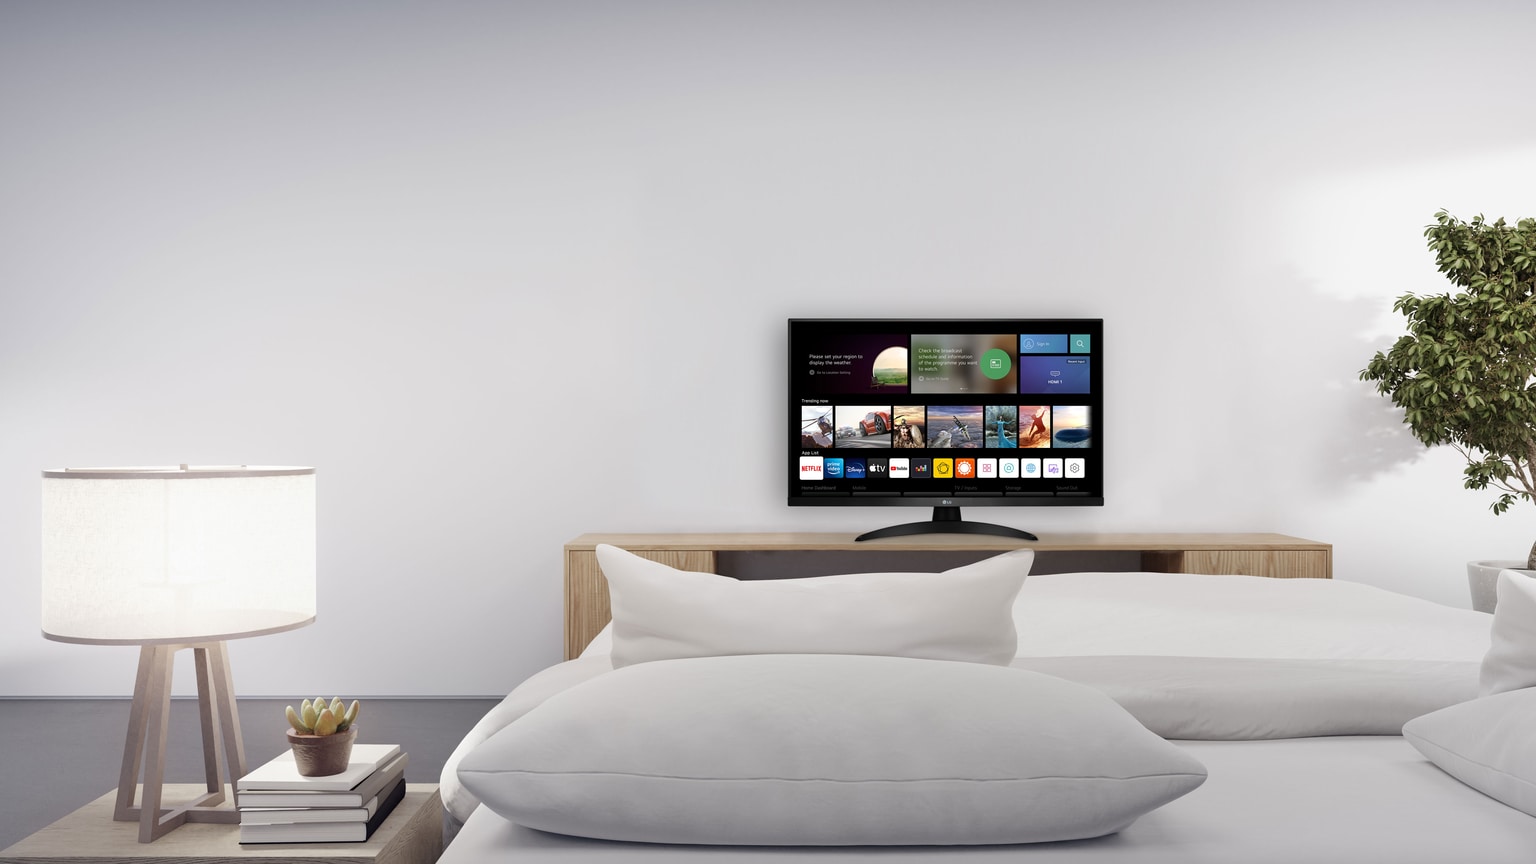 Luce blu degli schermi: immagine di TV davanti a un divano